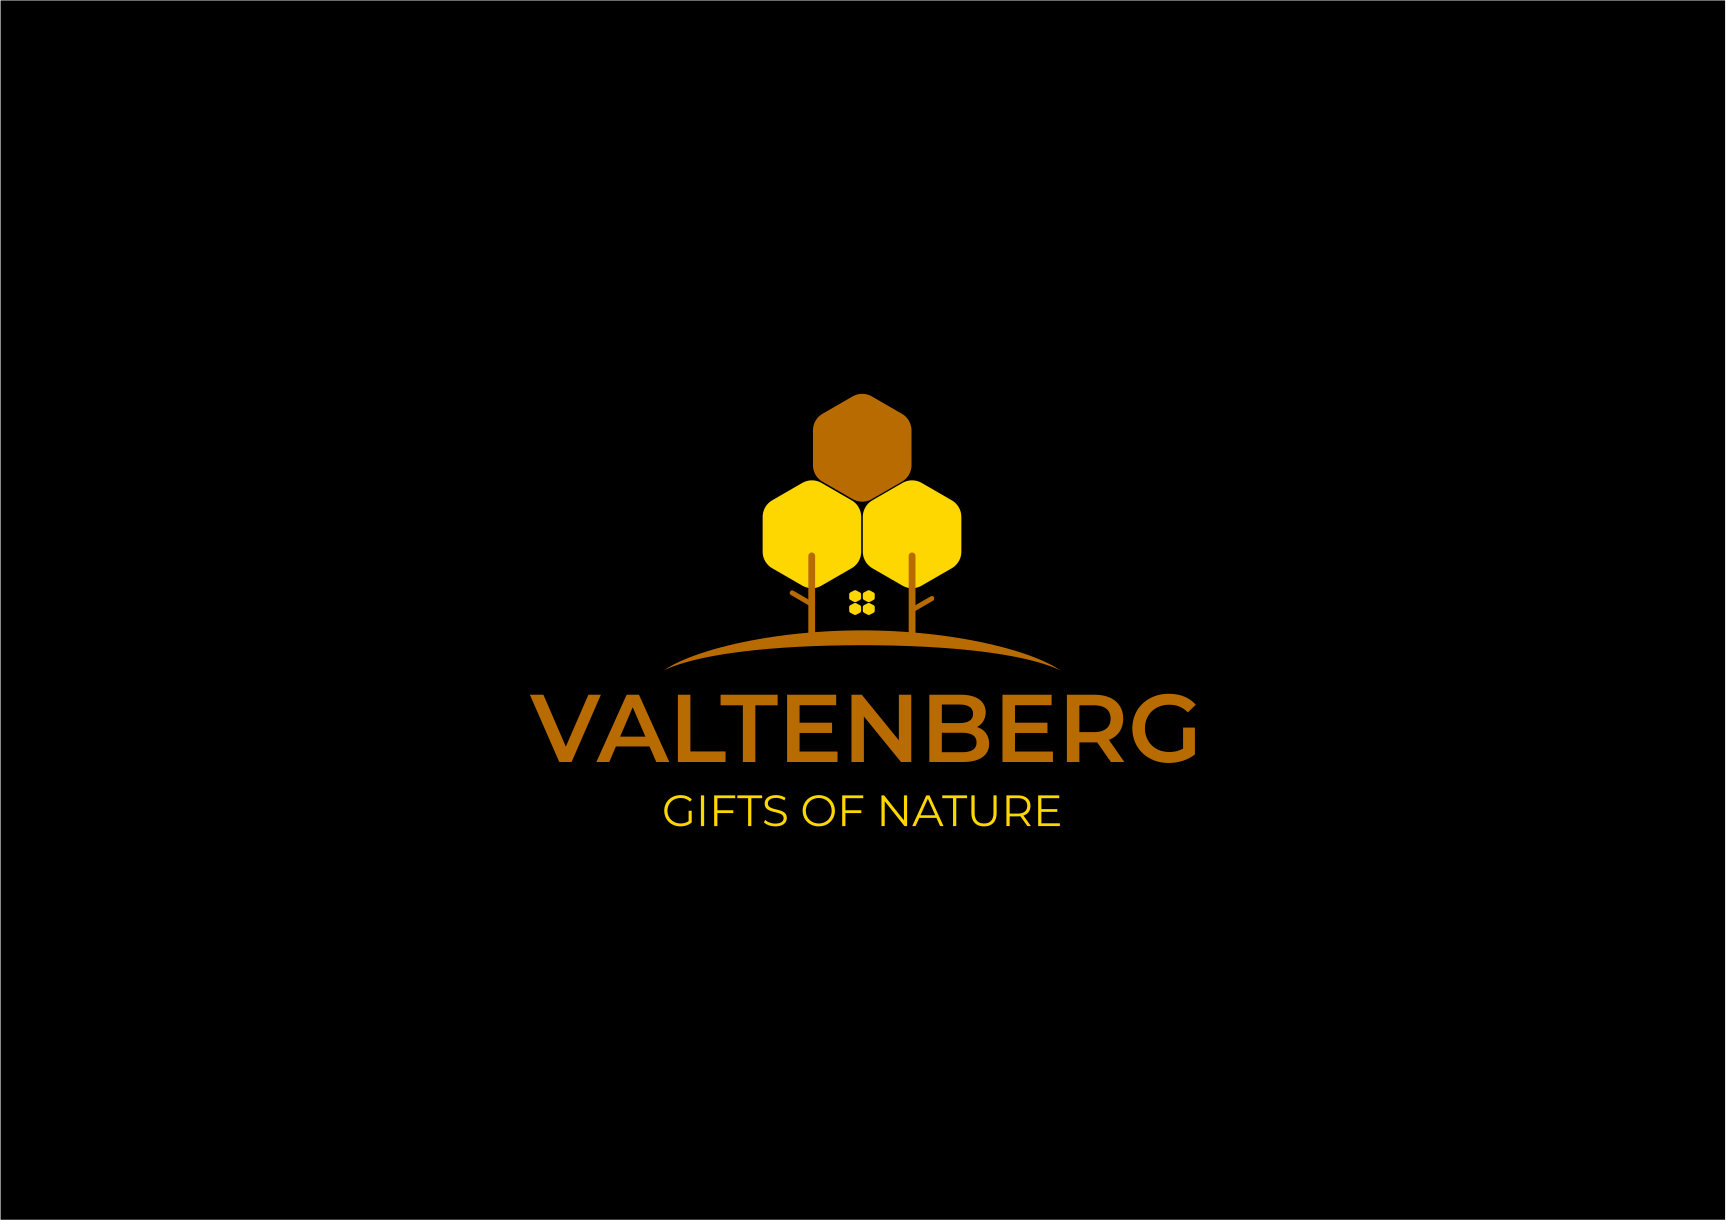 Valtenberg logo